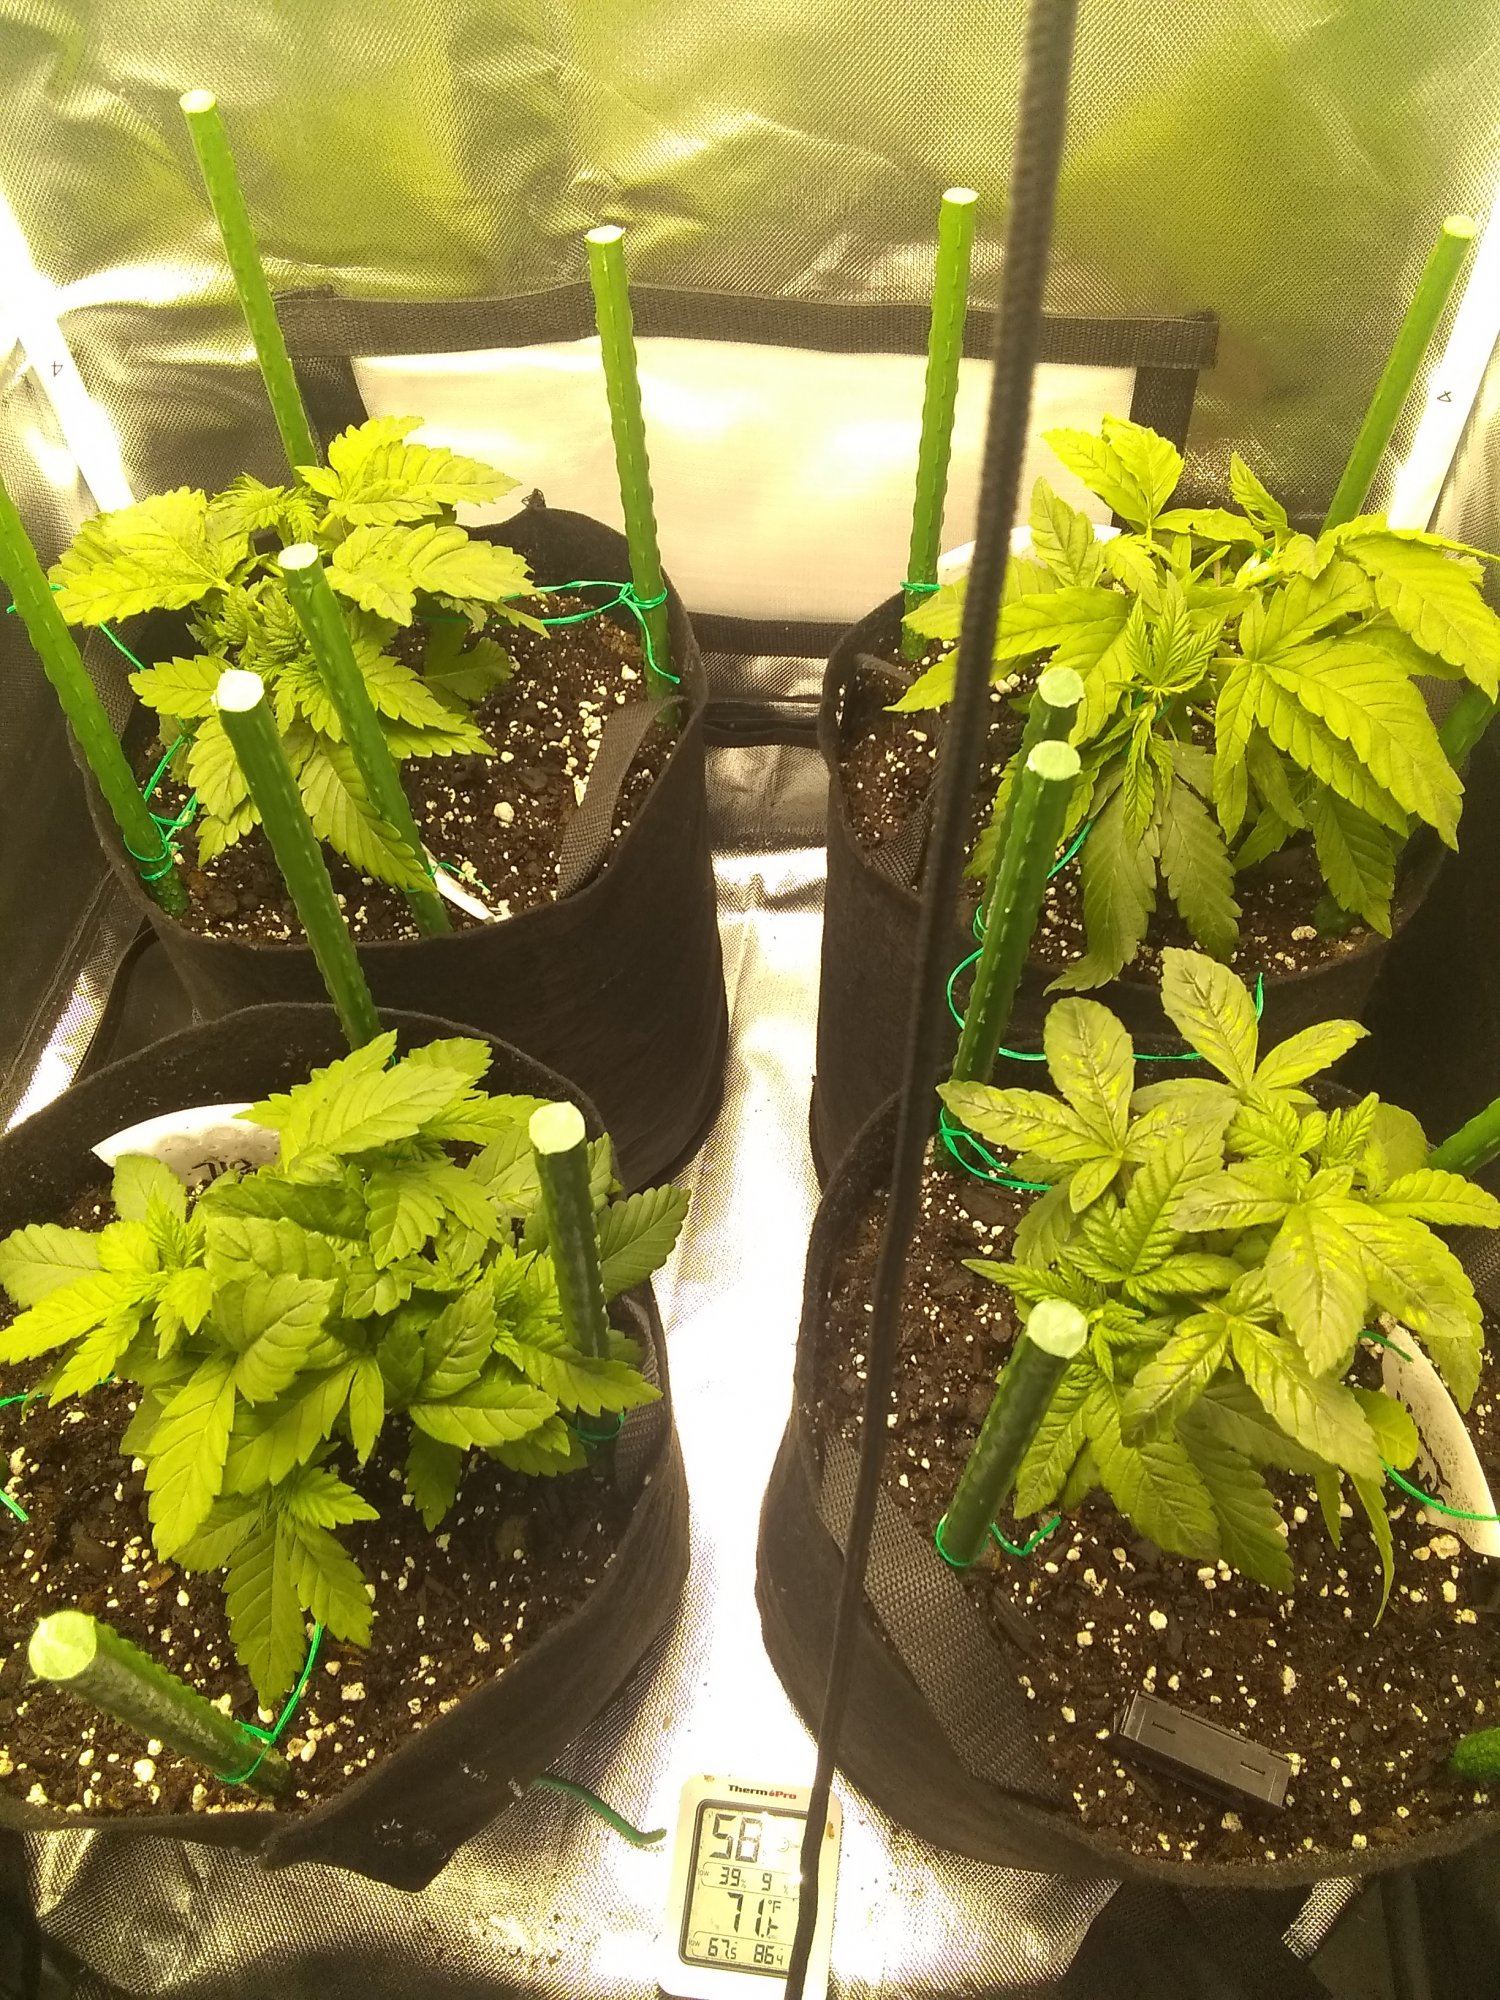 How do my plants look 4